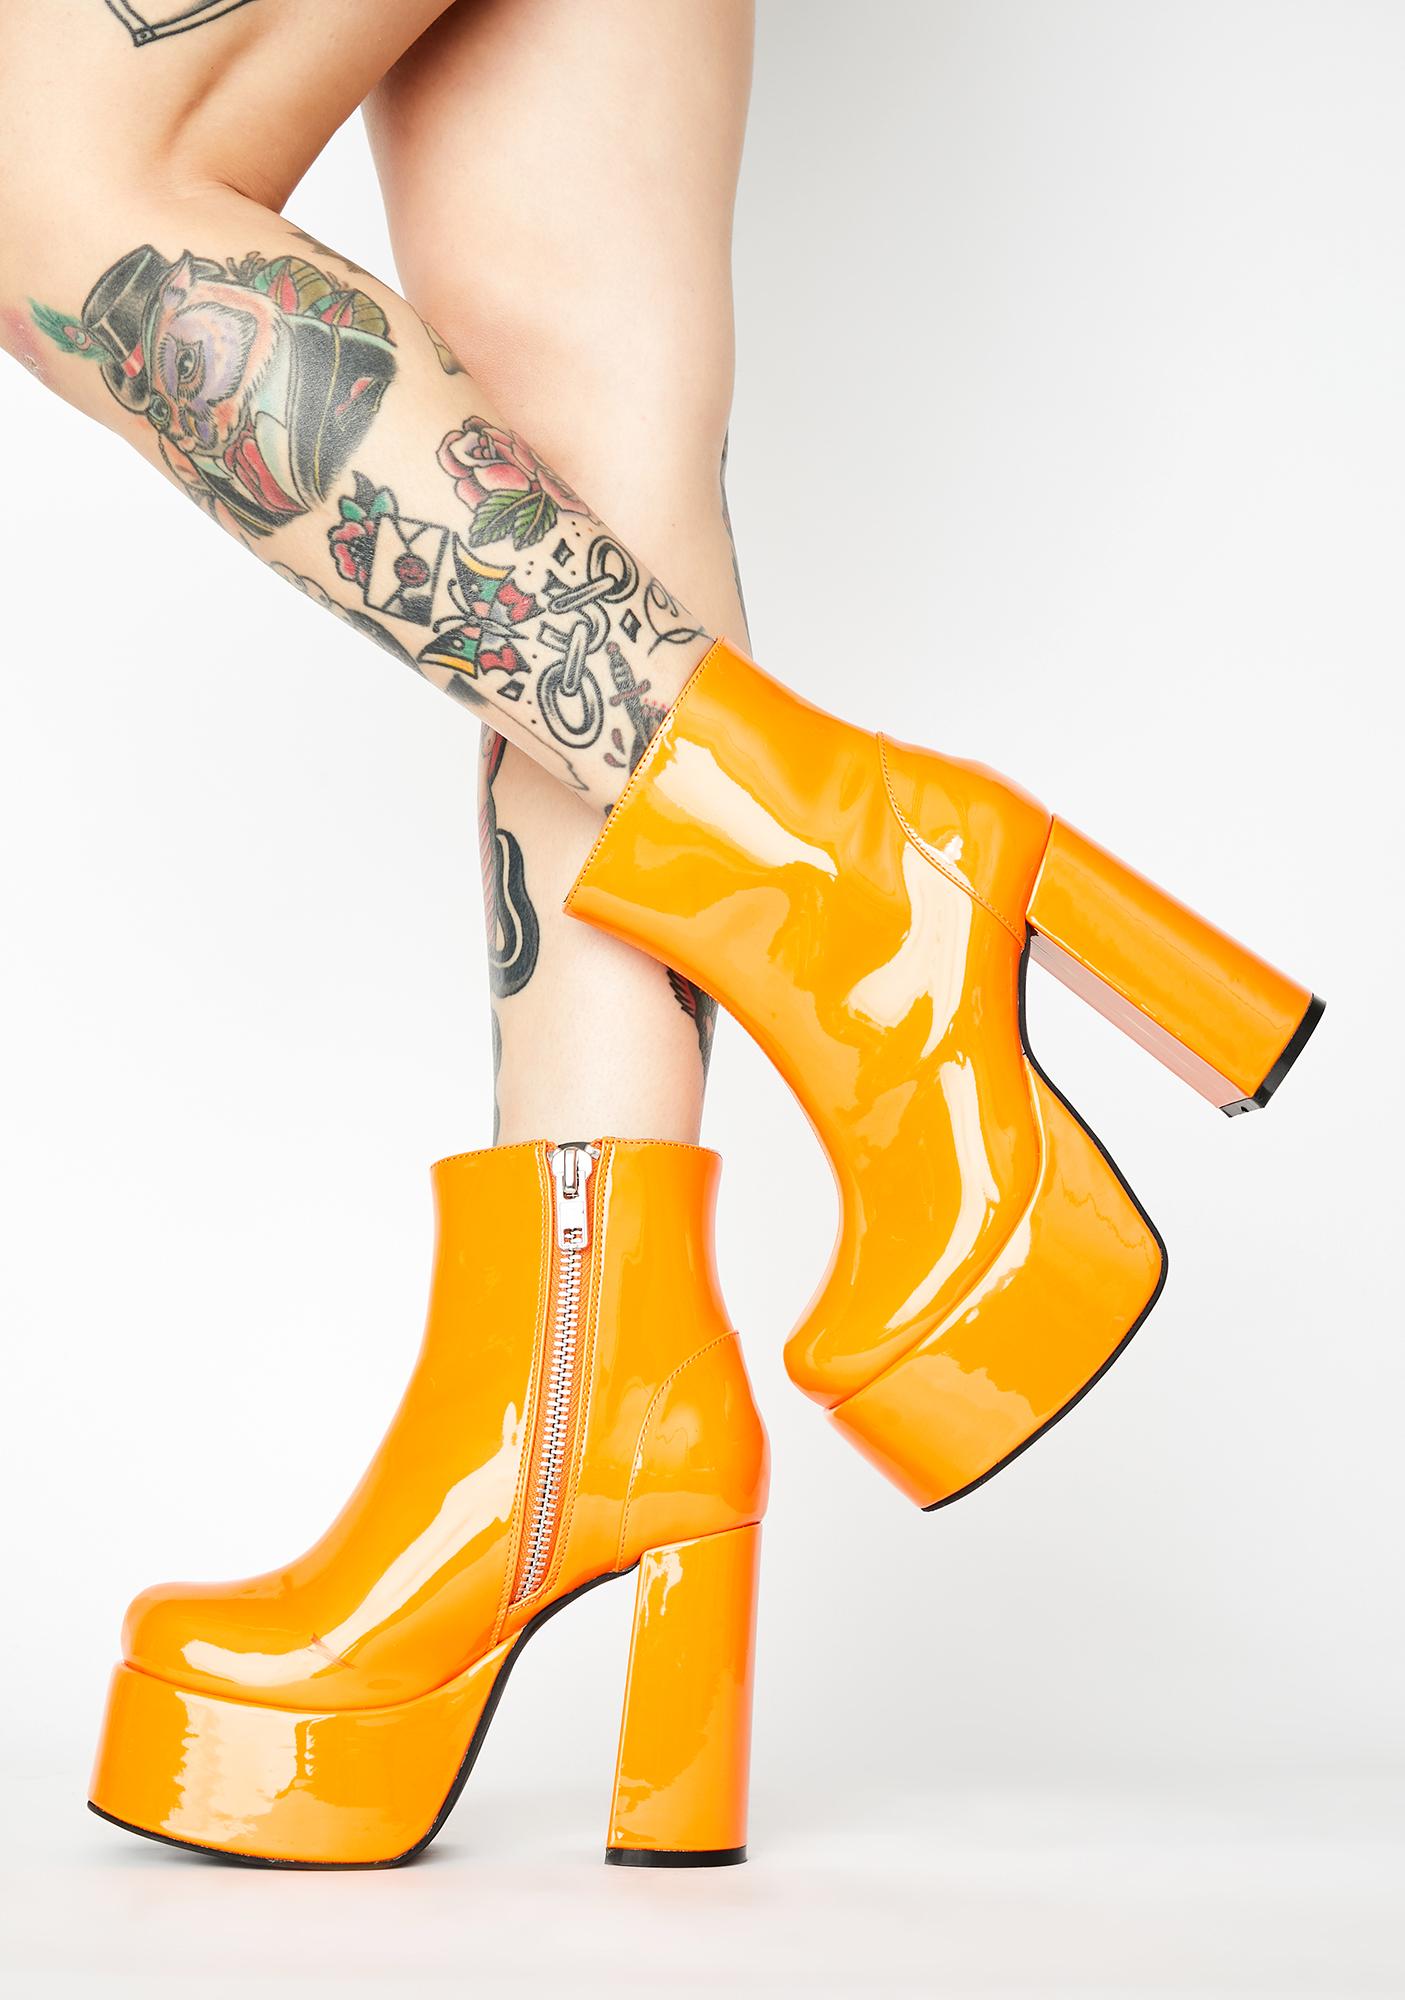 orange patent boots